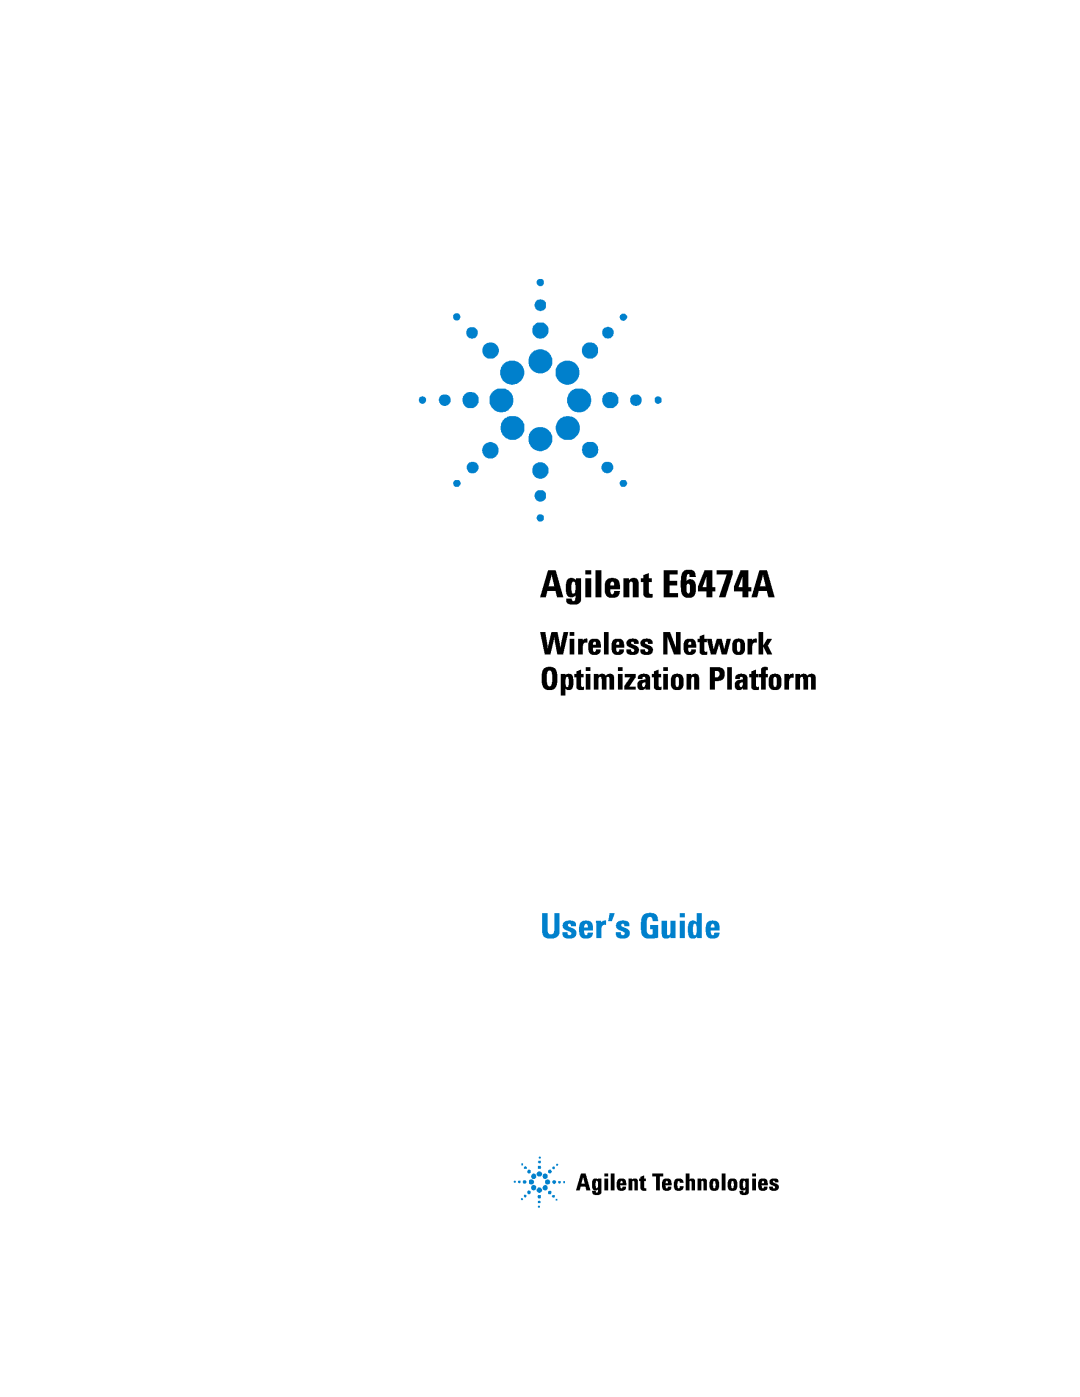 Agilent Technologies Agilent E6474A manual Wireless Network Optimization Platform, User’s Guide, Agilent Technologies 